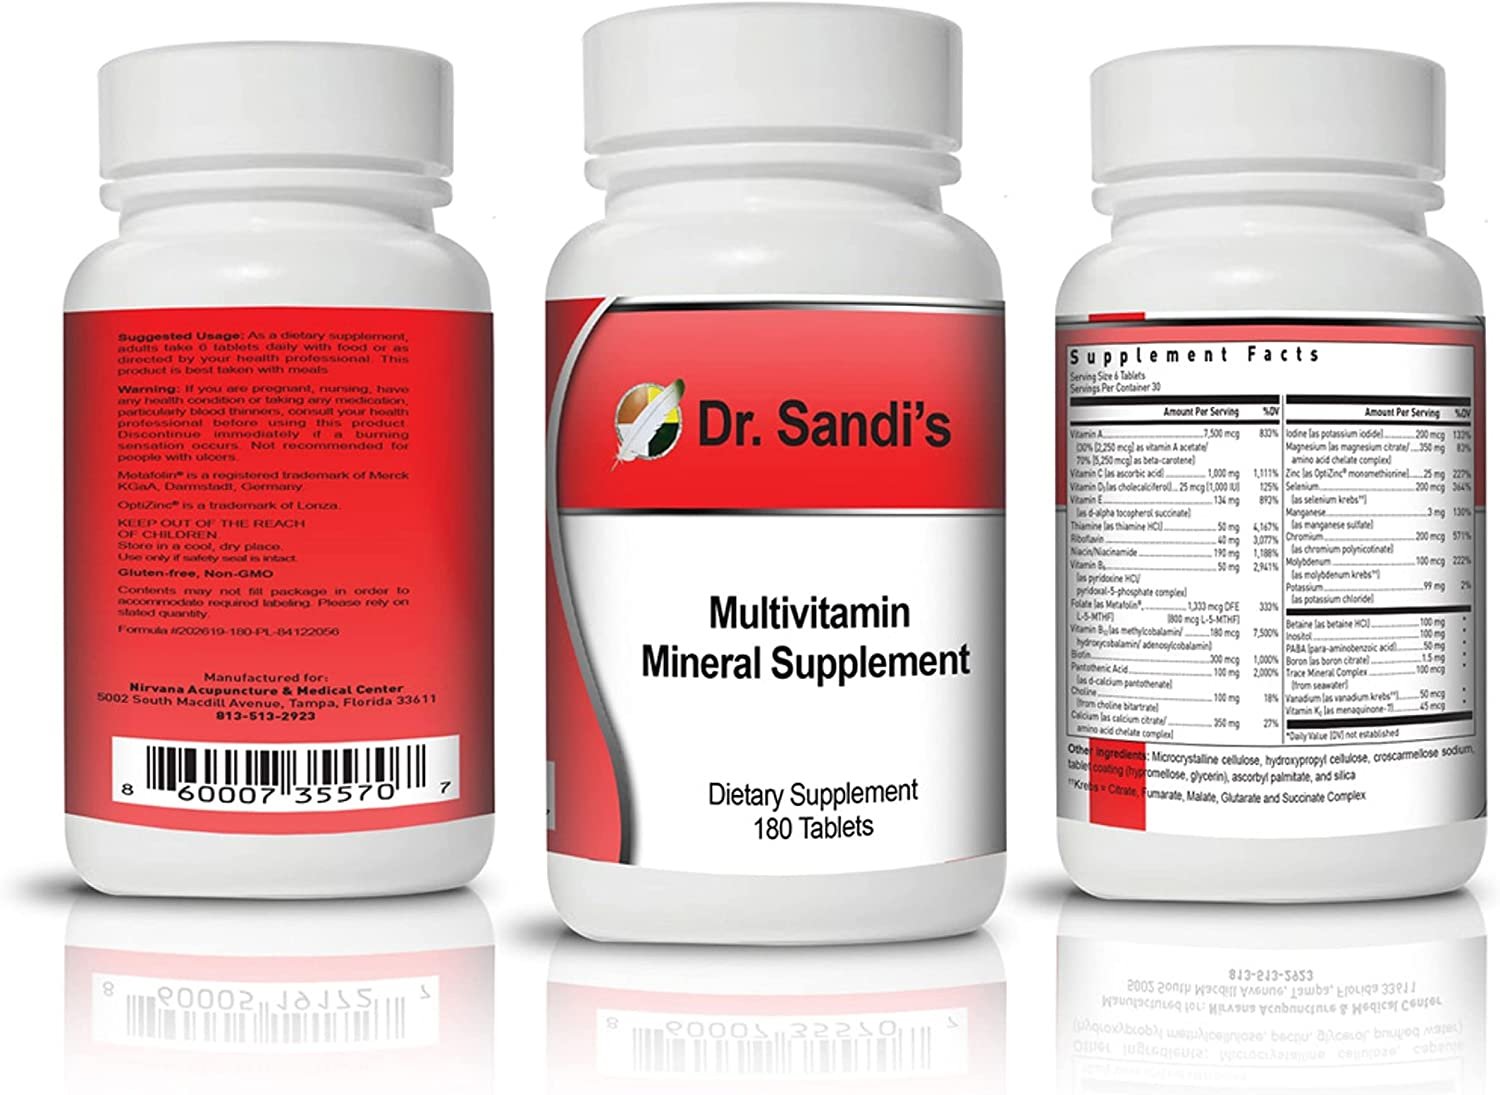 Dr. Sandi's Multivitamin Mineral Supplement - Daily General Wellness and Health Support Multivitamin for Men and Women - Vitamin B12, Vitamin C, Vitamin D3, Vitamin E, Gluten Free, Non GMO - 180 Count